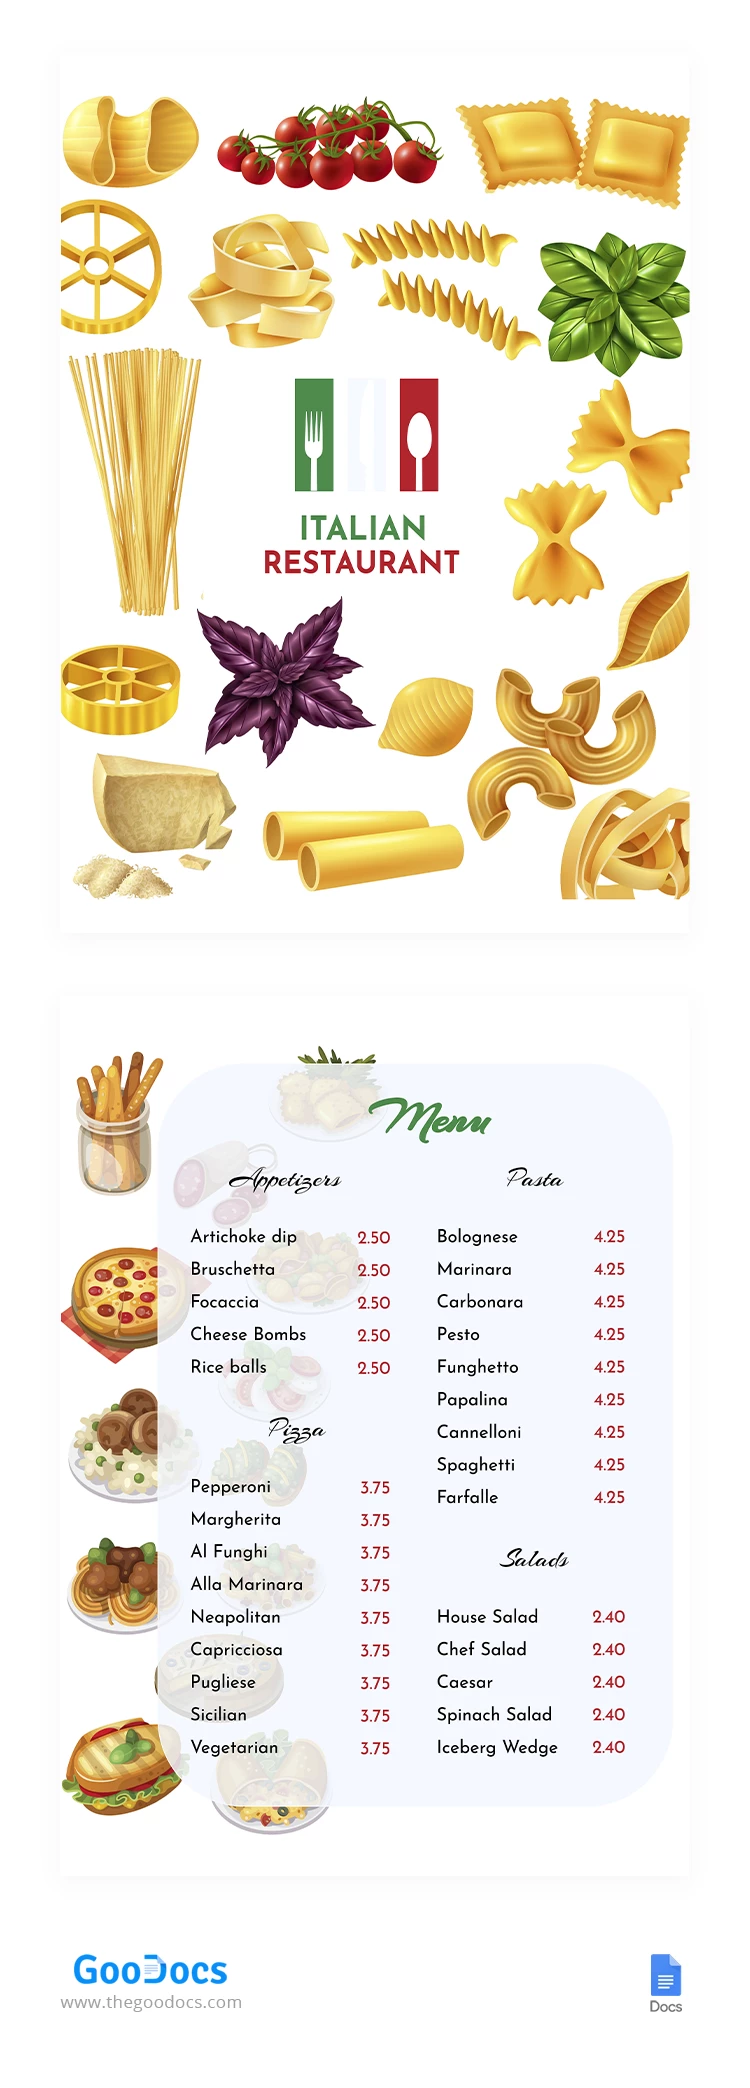 Menu du restaurant italien - free Google Docs Template - 10064558